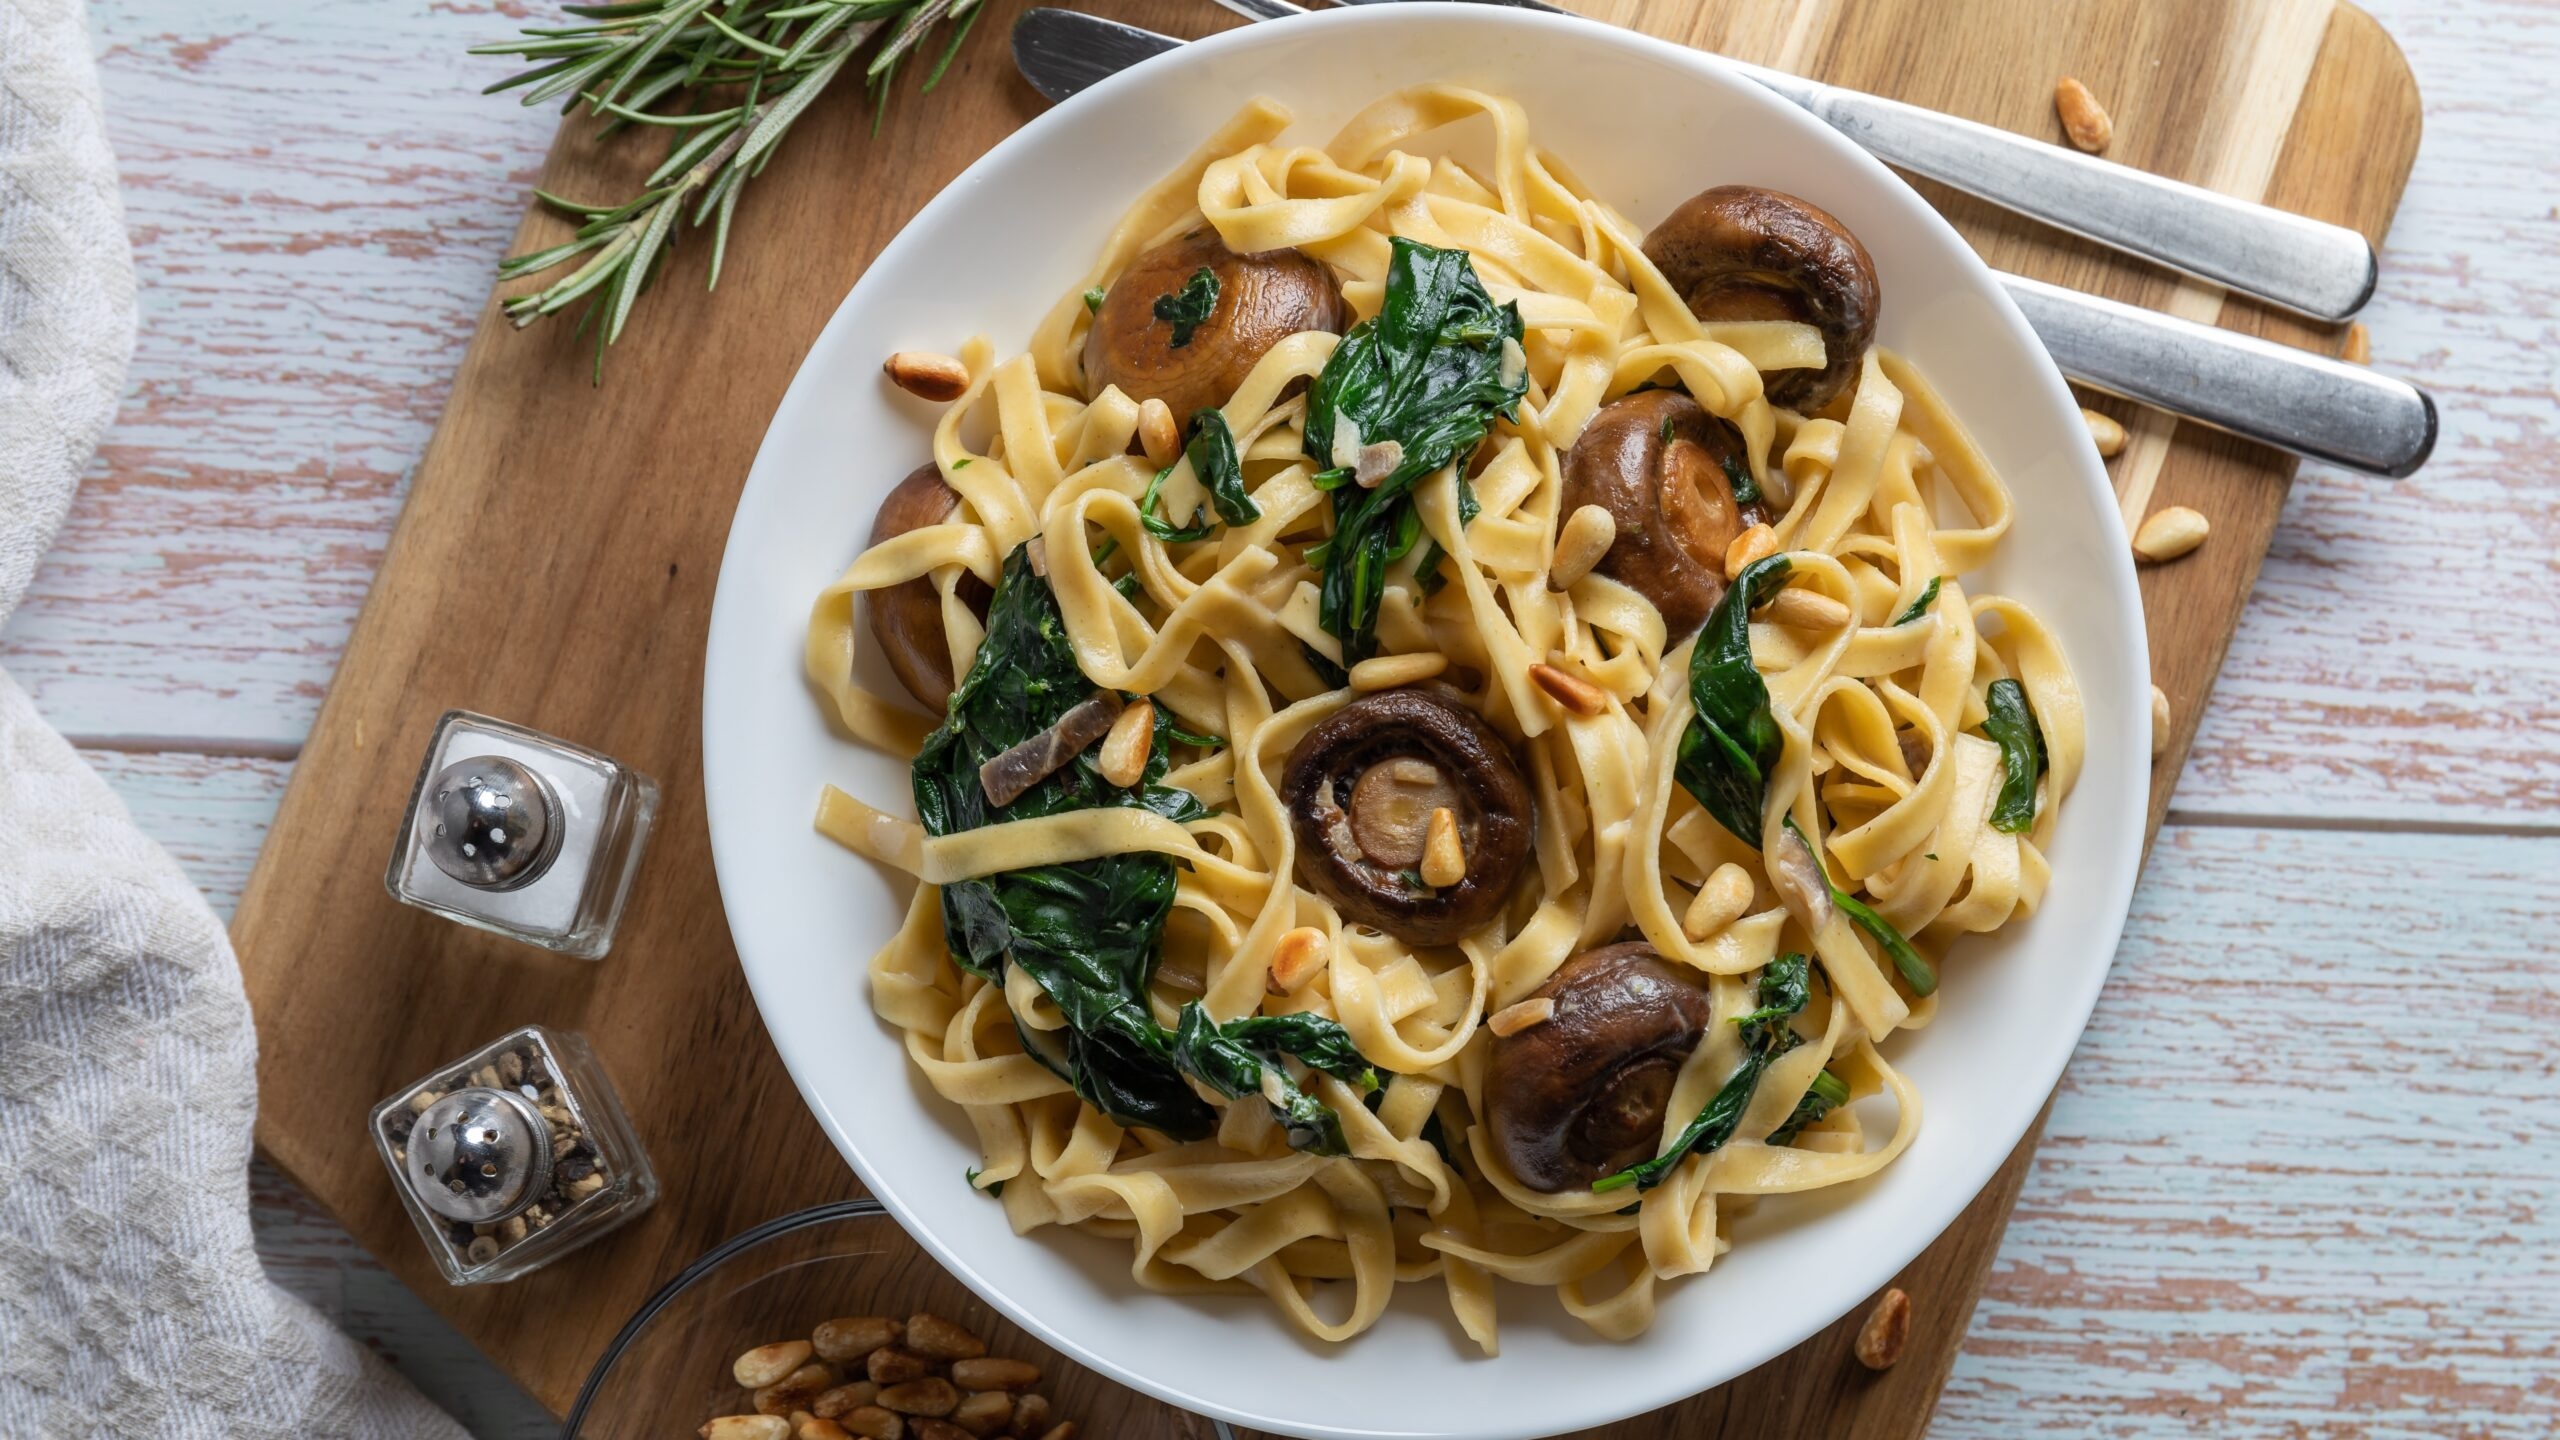 Wild garlic spaghetti with mushrooms, Quick and easy, Flavorful pasta dish, Eat Club's recipe, 2560x1440 HD Desktop